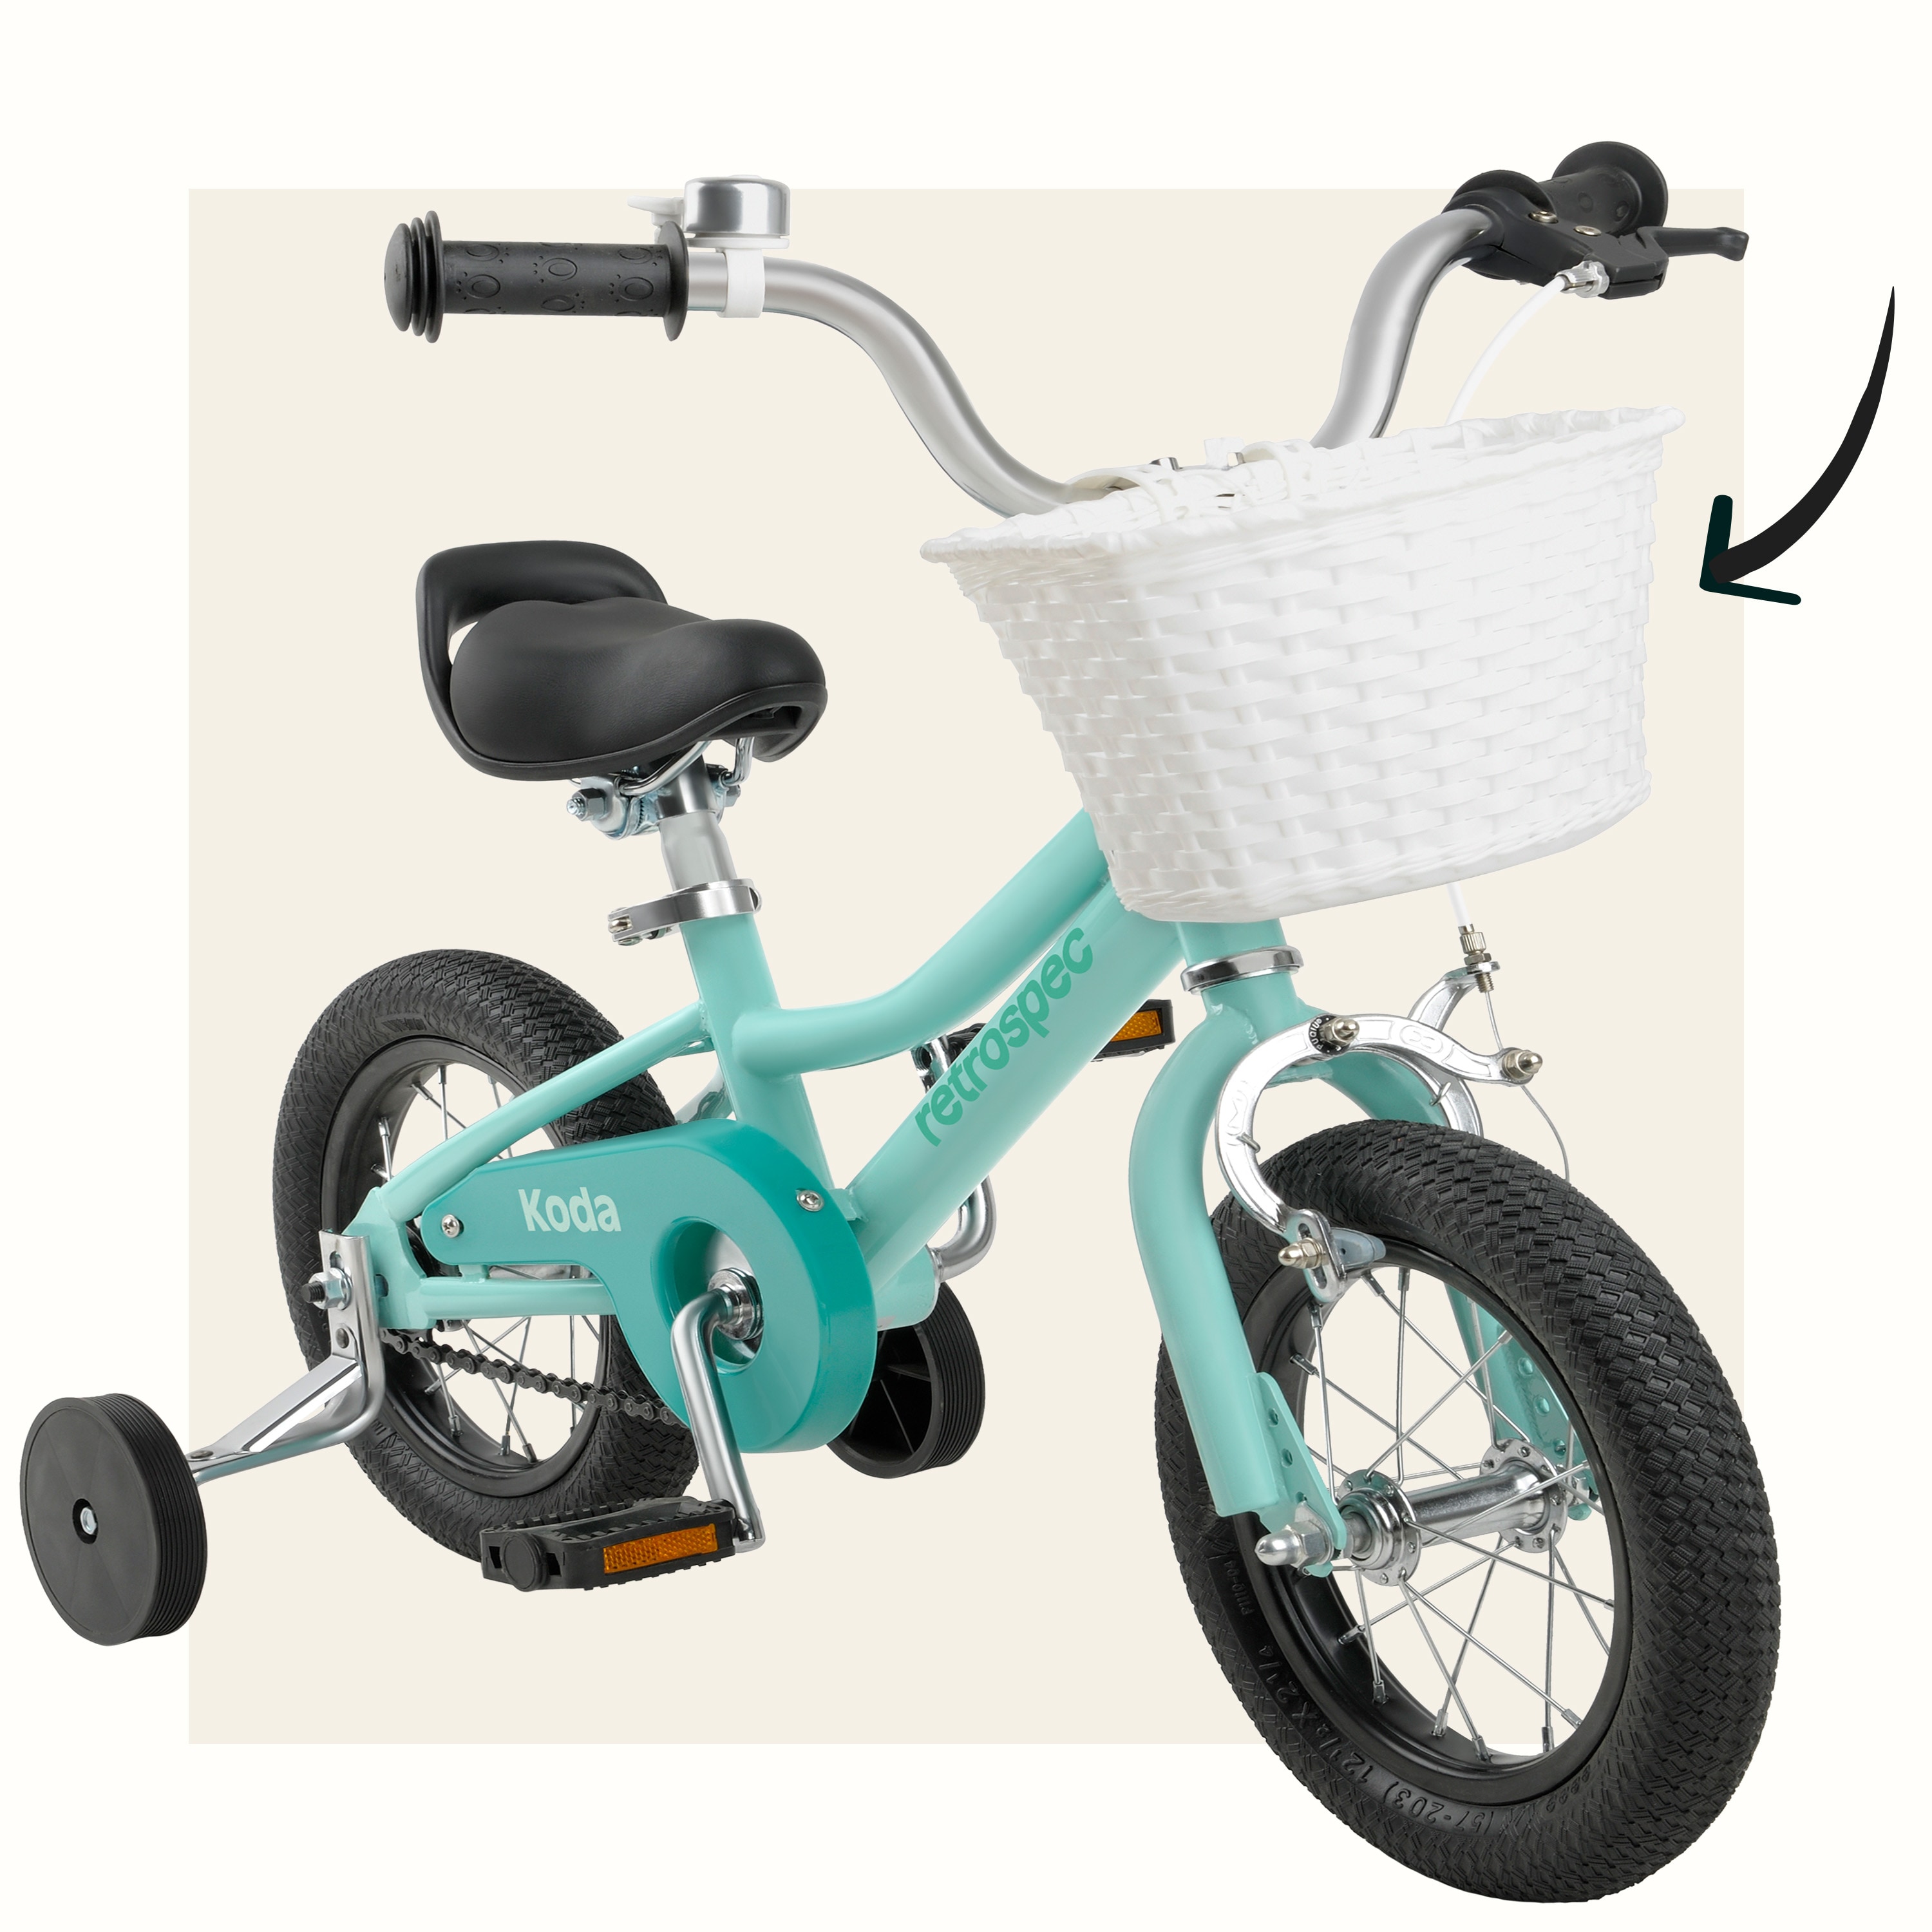 Koda 12-inch Kids' Bike 2-3 yrs  Retrospec